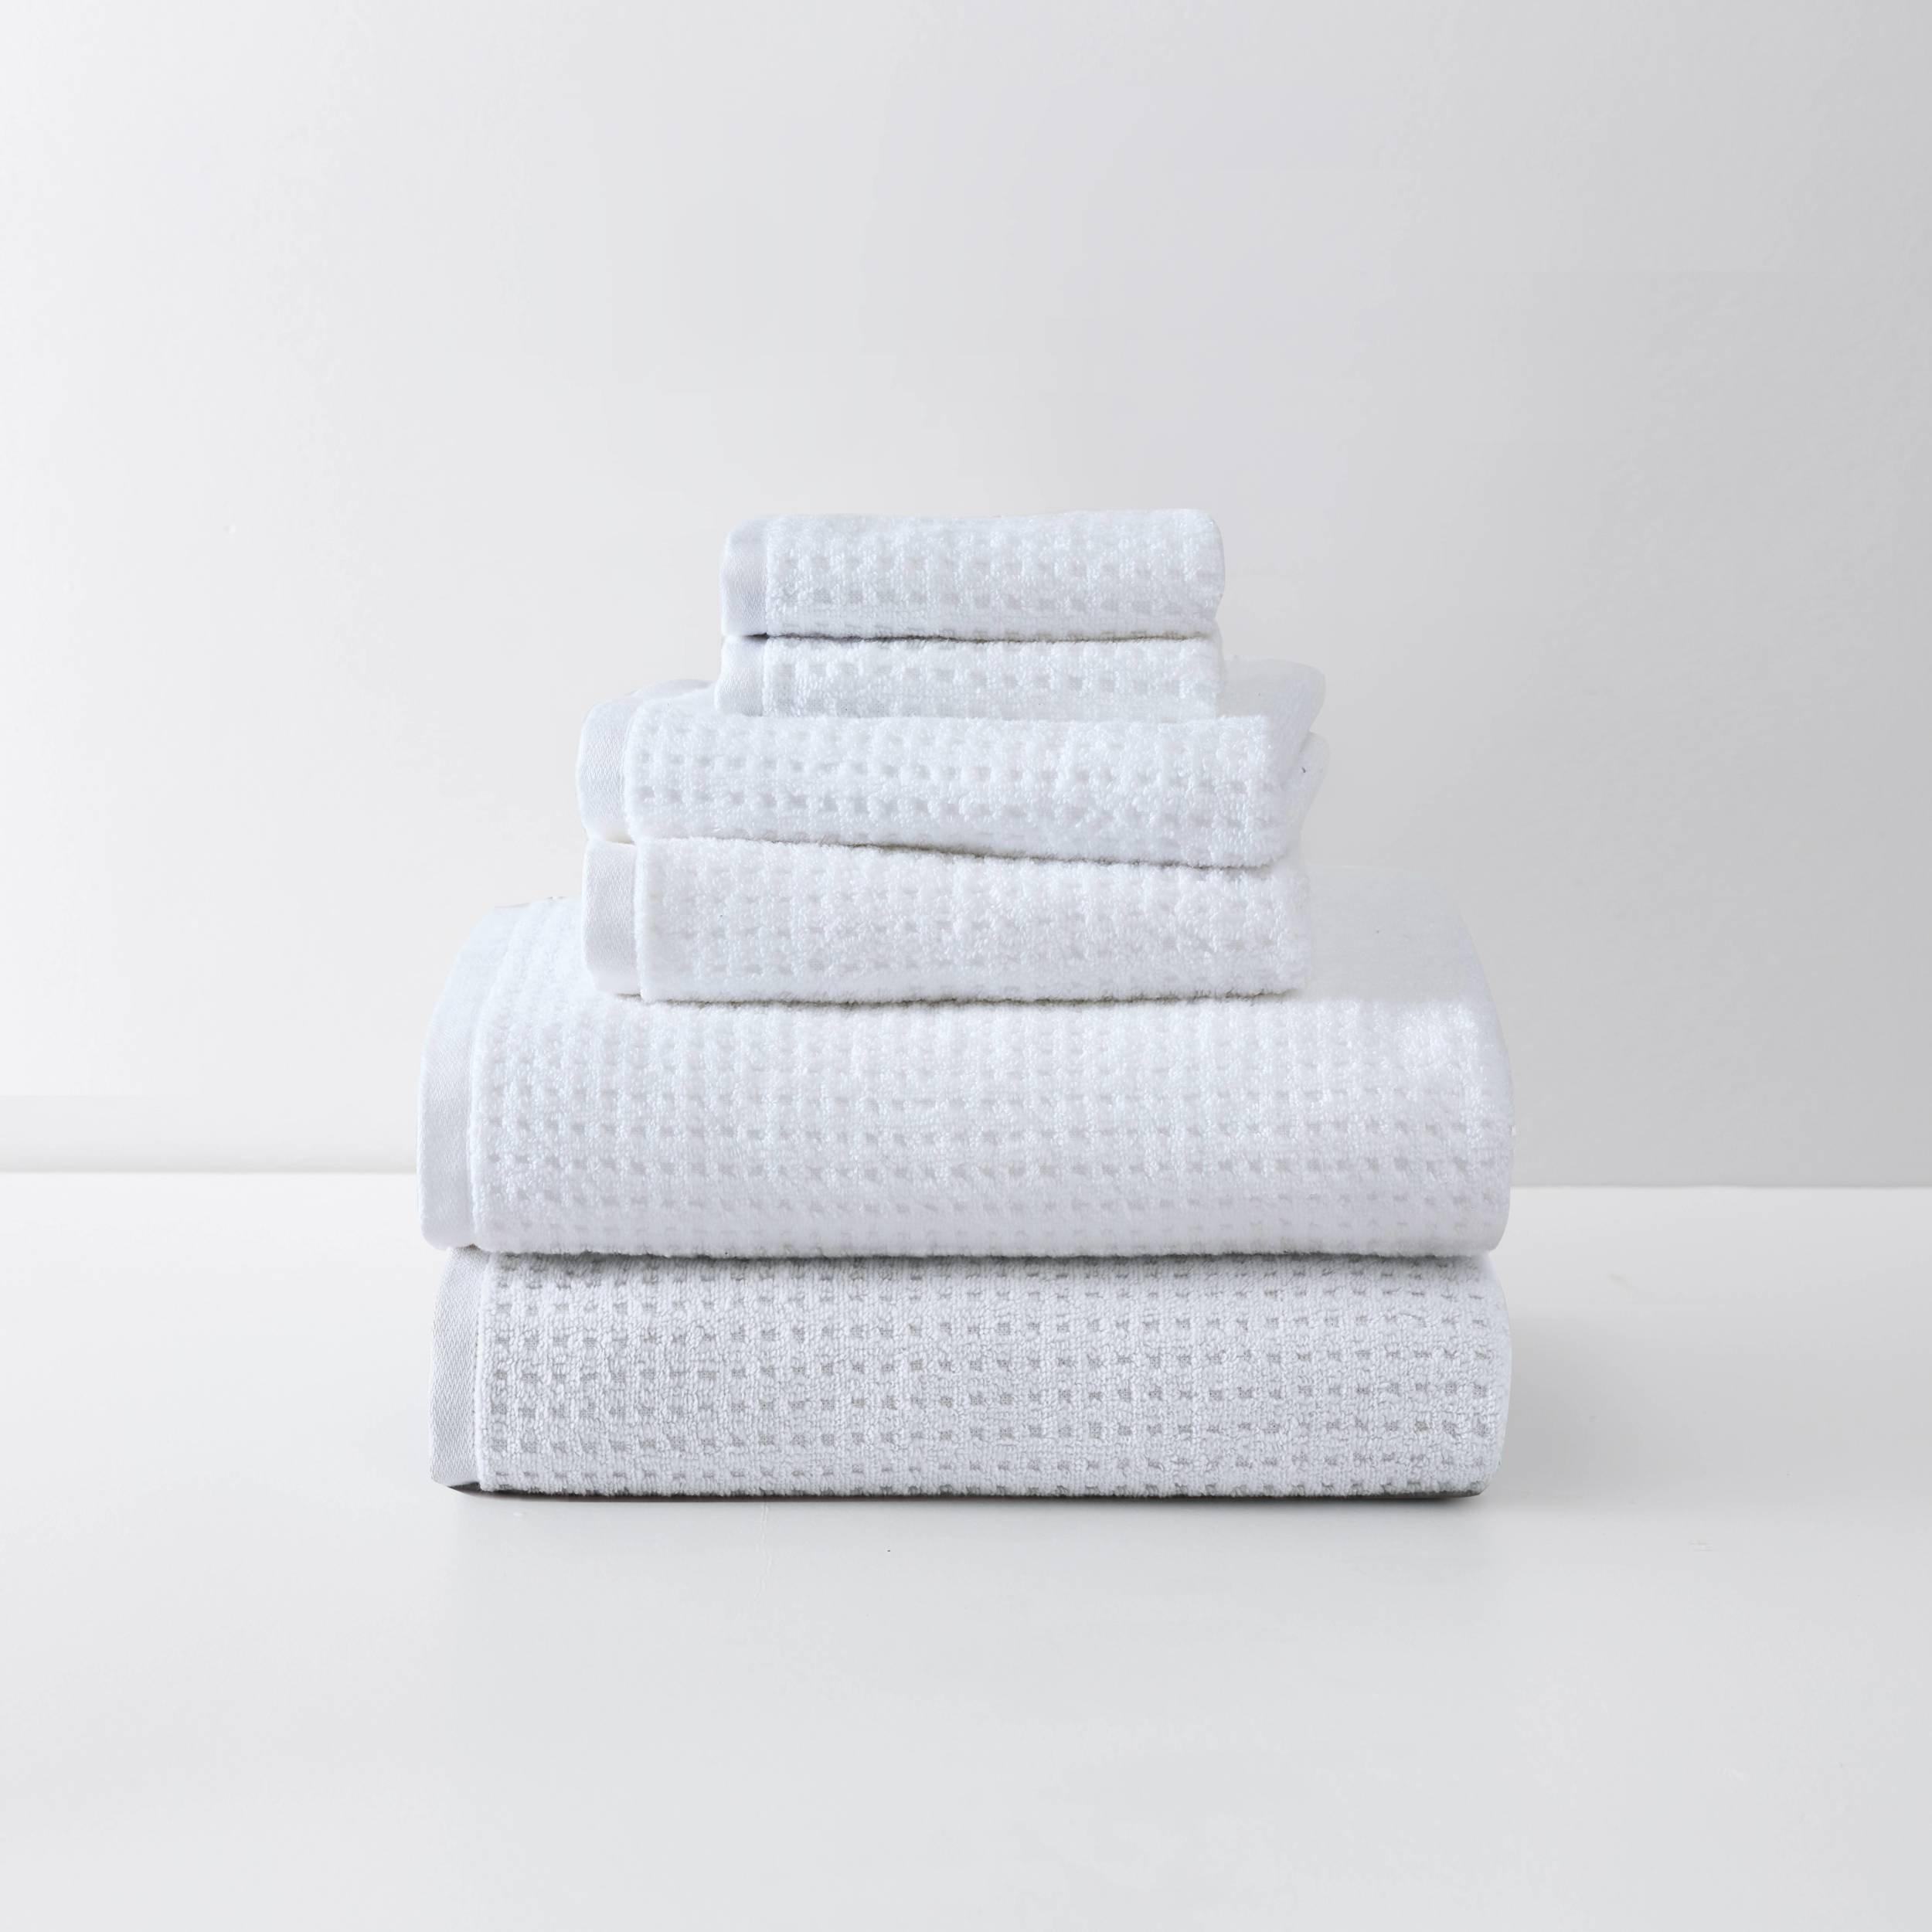 https://images.beallsflorida.com/i/beallsflorida/441-2450-1945-10-yyy/*Northern-Pacific-6-Piece-Cotton-Terry-Towel-Set*?$product$&fmt=auto&qlt=default